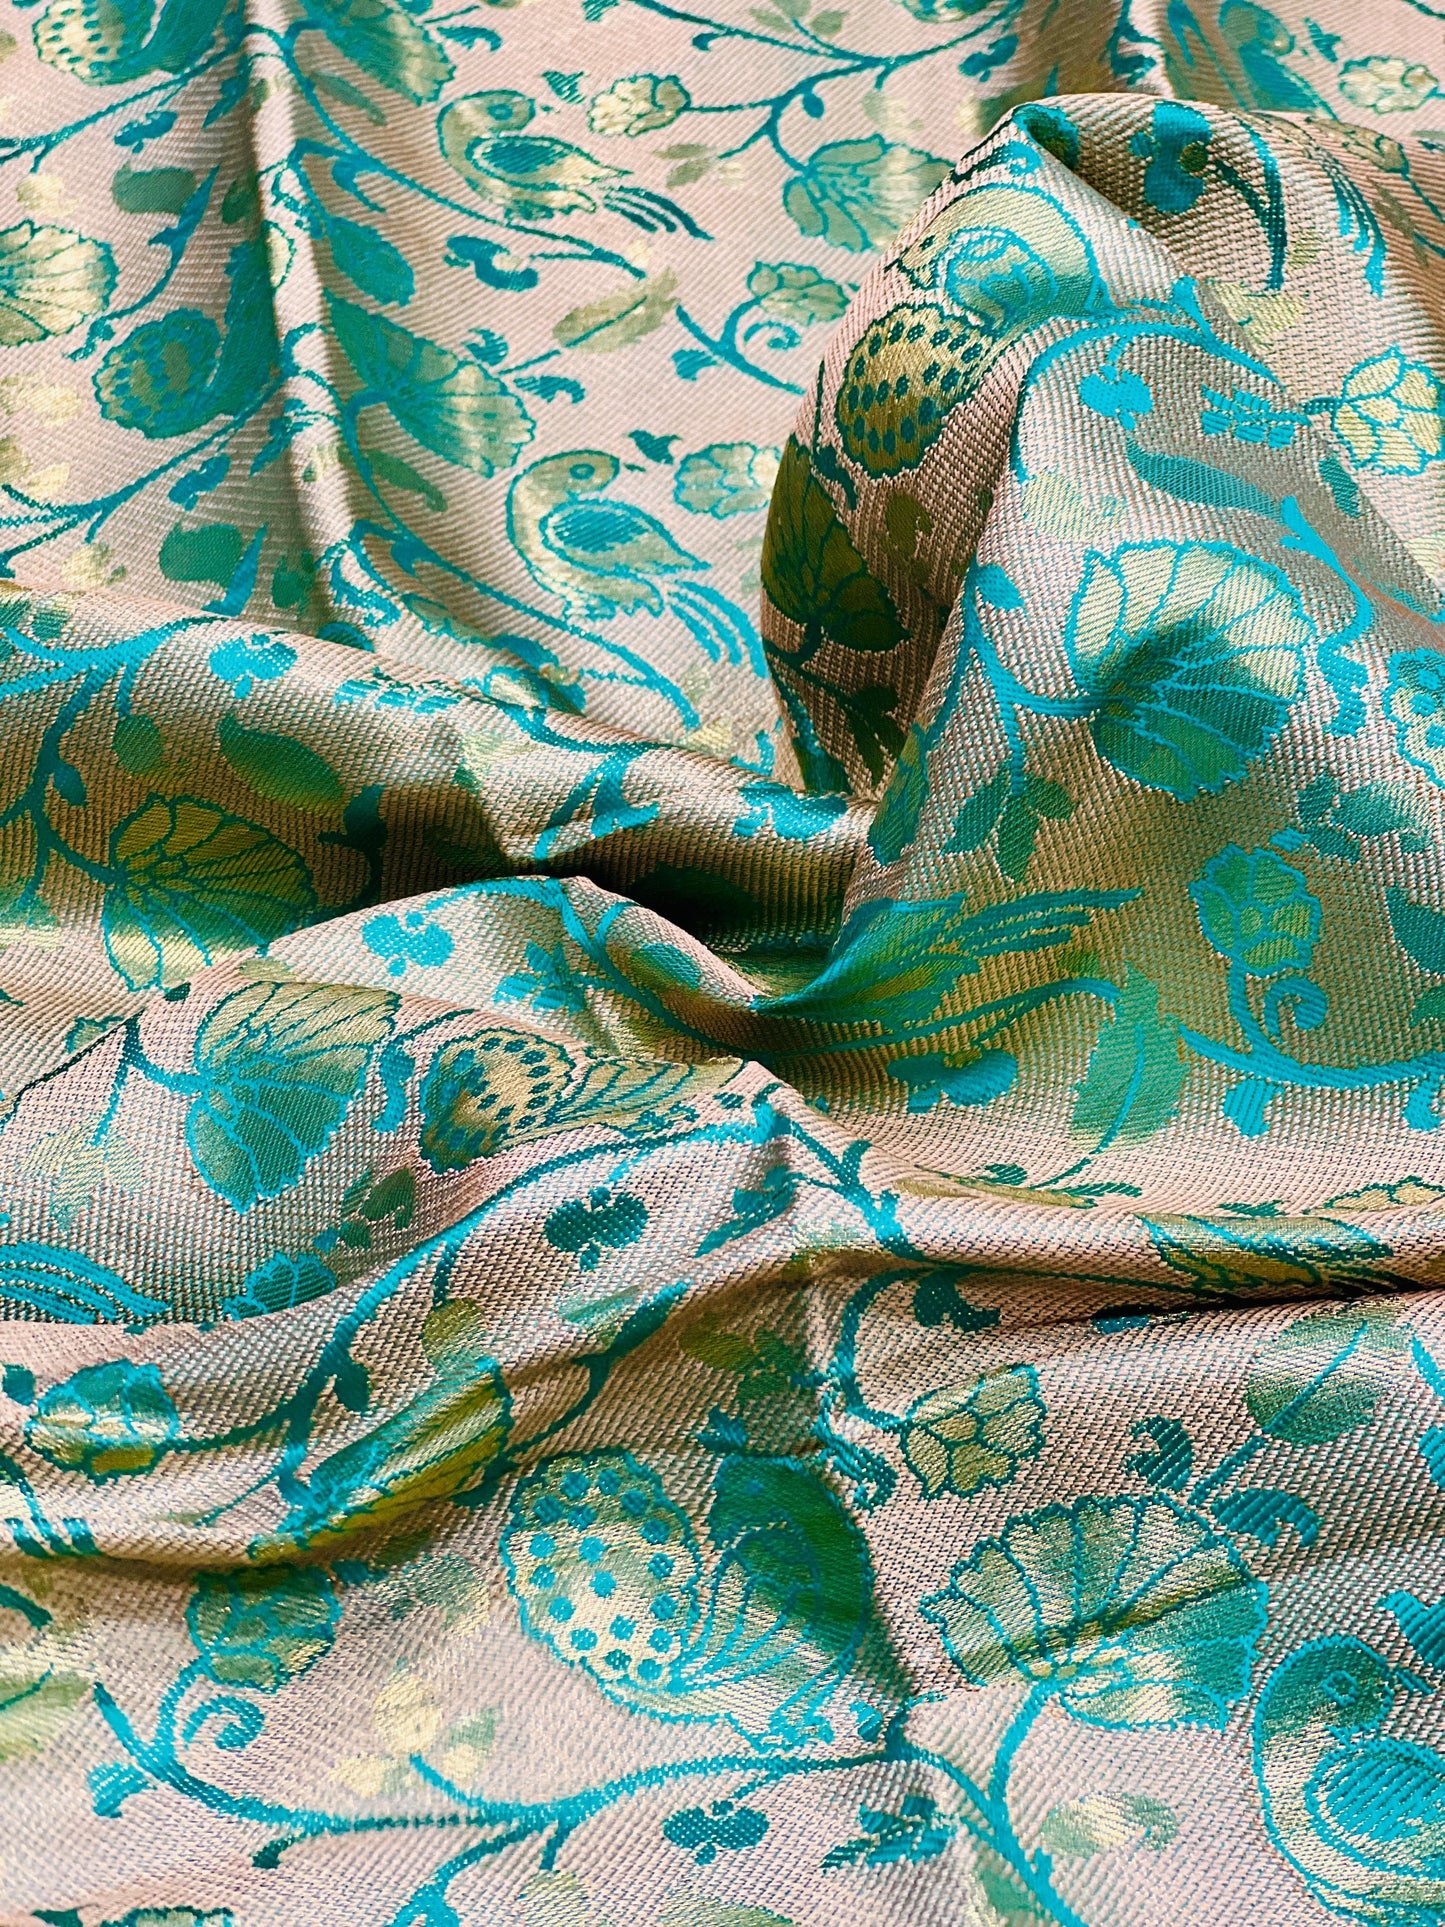 Premium Turquoise dual tone kanjiavaram style silk saree with blouse